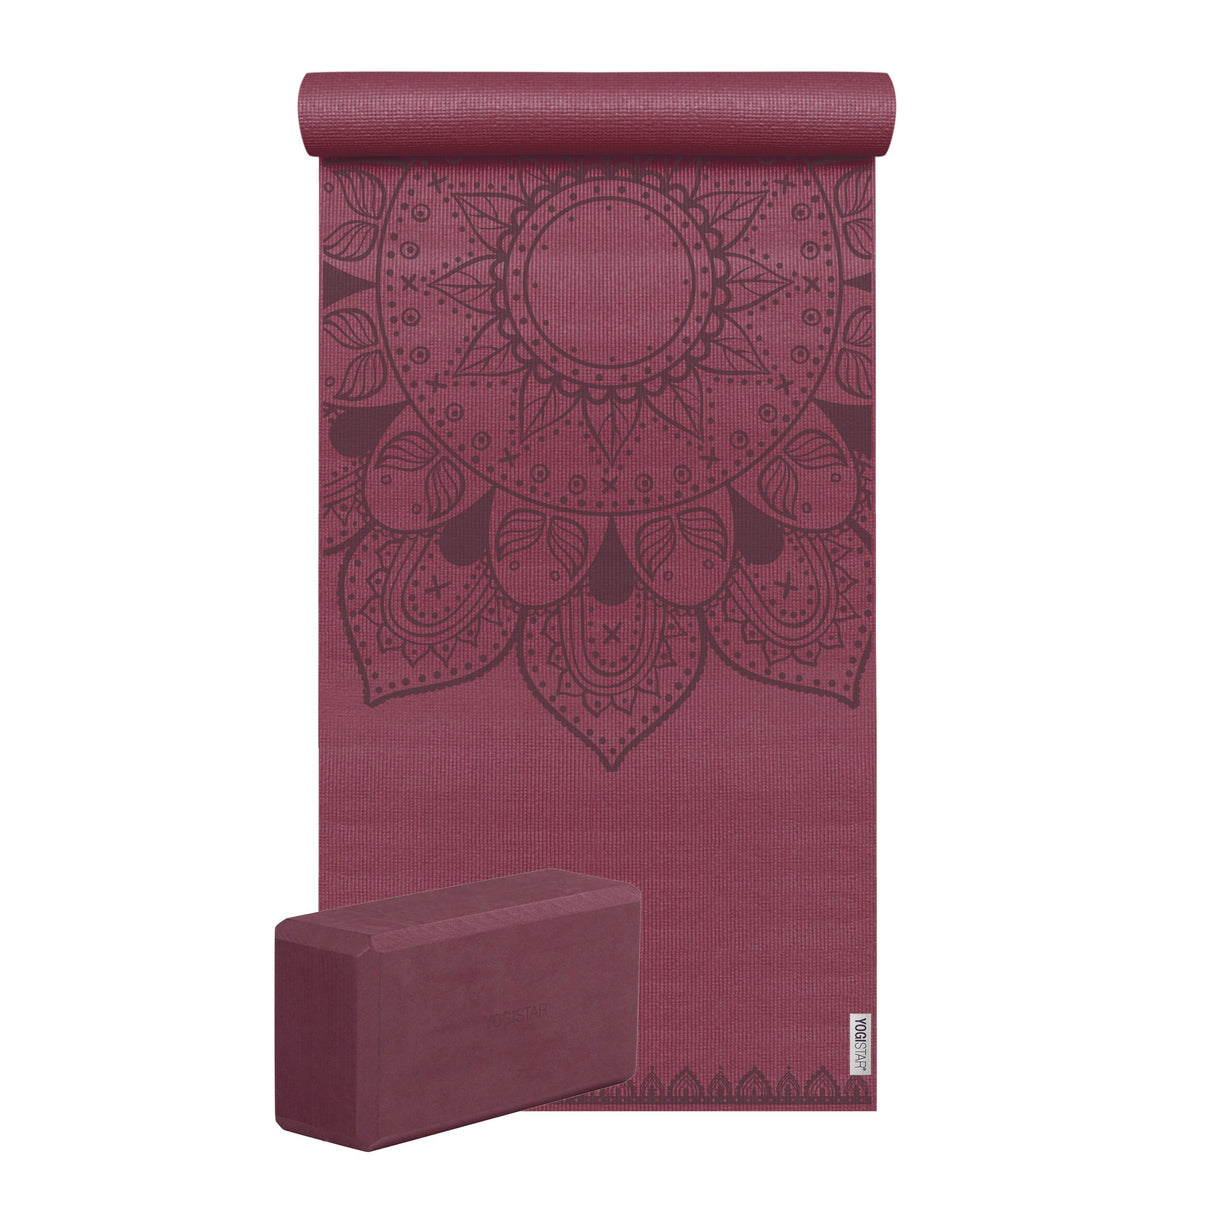 Yoga-Set Starter Edition - harmonic mandala (Yogamatte + 1 Yogablock) - bordeaux